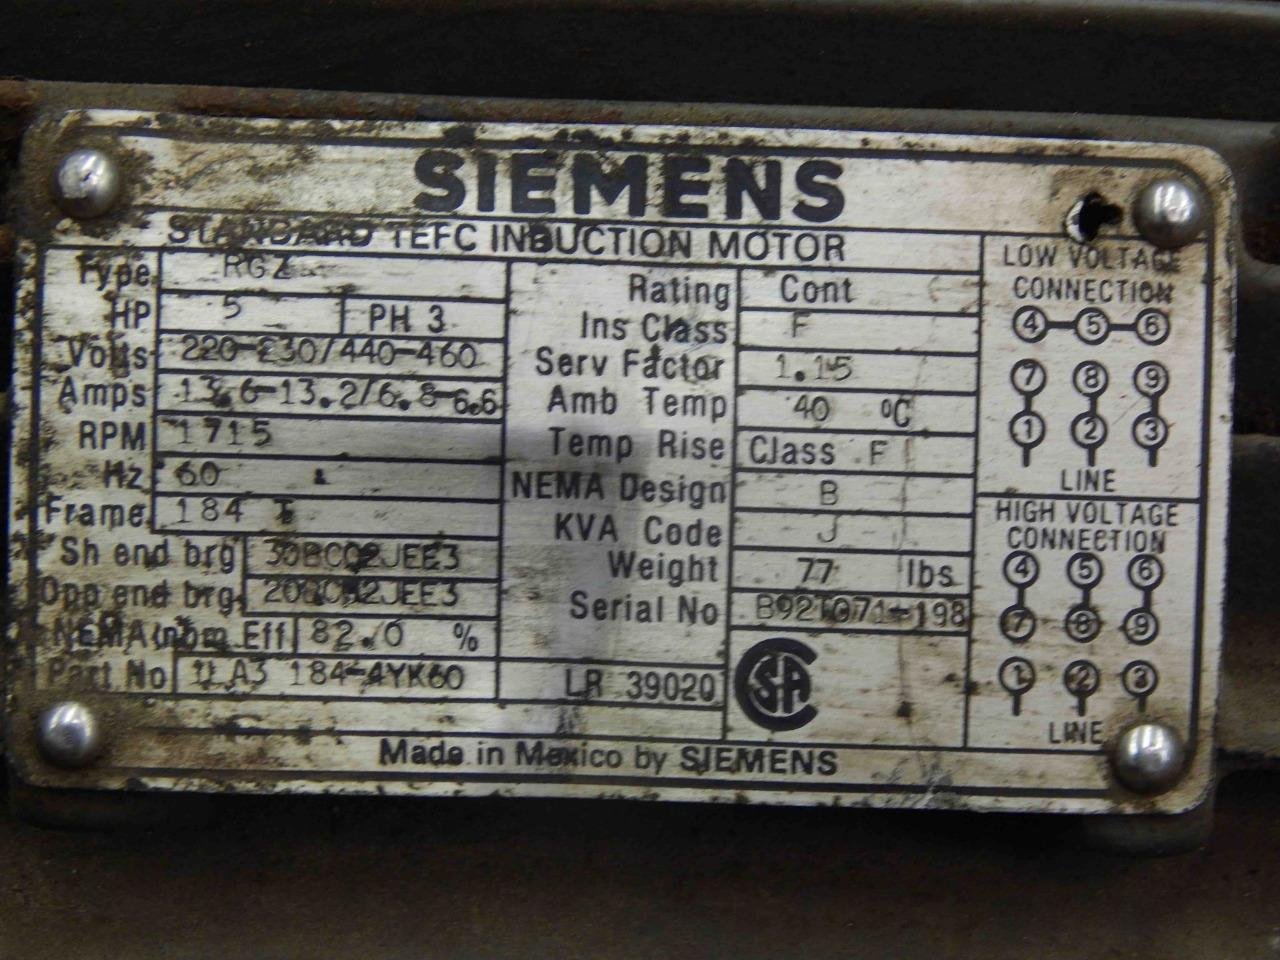 #118 Siemens Induction Motor Typ RGZ 5-HP 220-230/440-460V ... a 5 hp electric motor starter wiring 